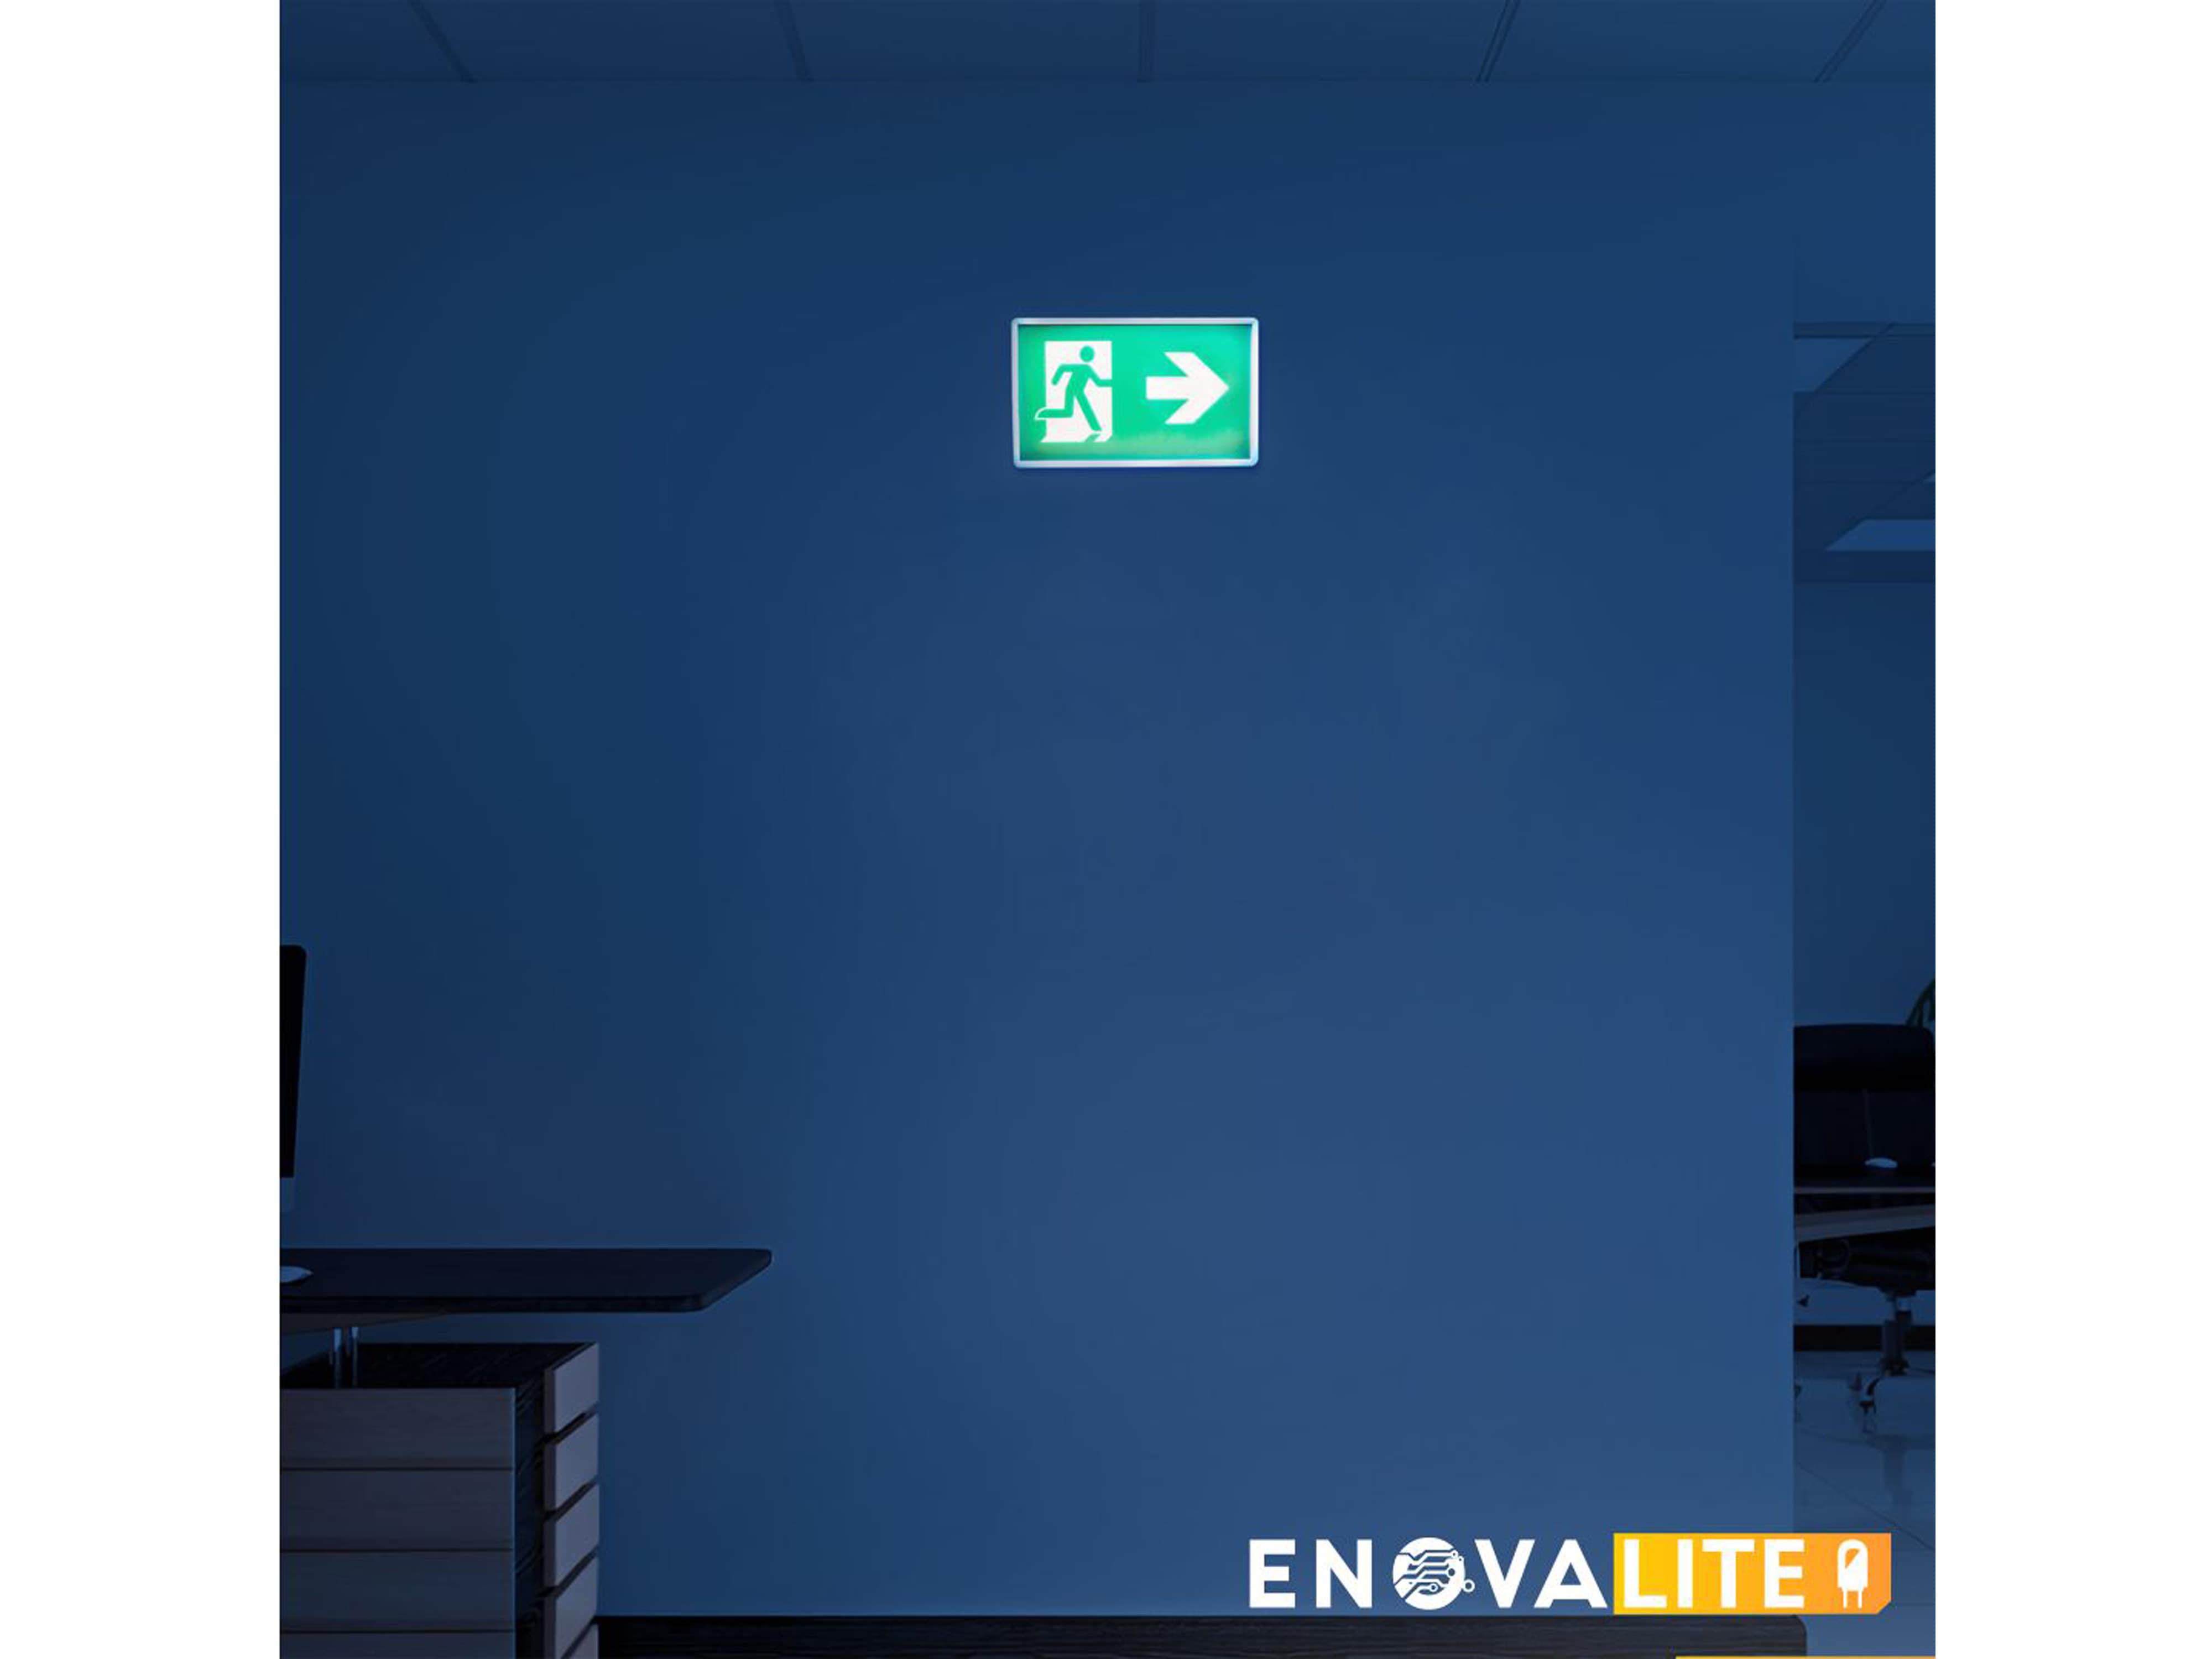 ENOVALITE LED-Fluchtwegleuchte, 200101, inkl. Notstromeinheit, TEST-Funktion